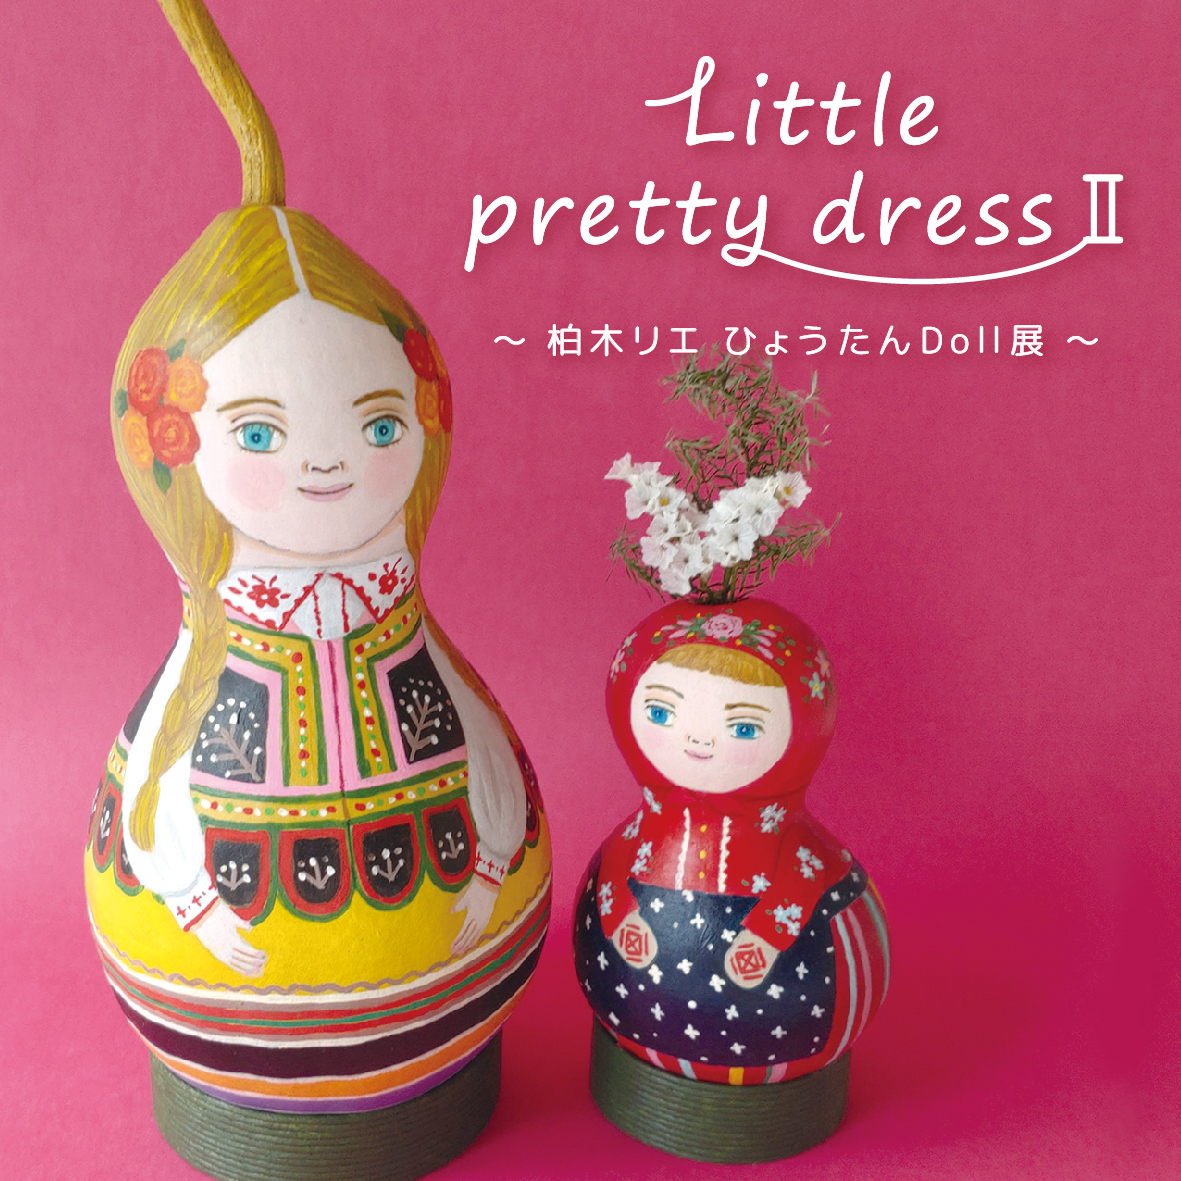 Little pretty dress Ⅱ」～ 柏木リエ ひょうたんDoll展 ～ - GINZA 